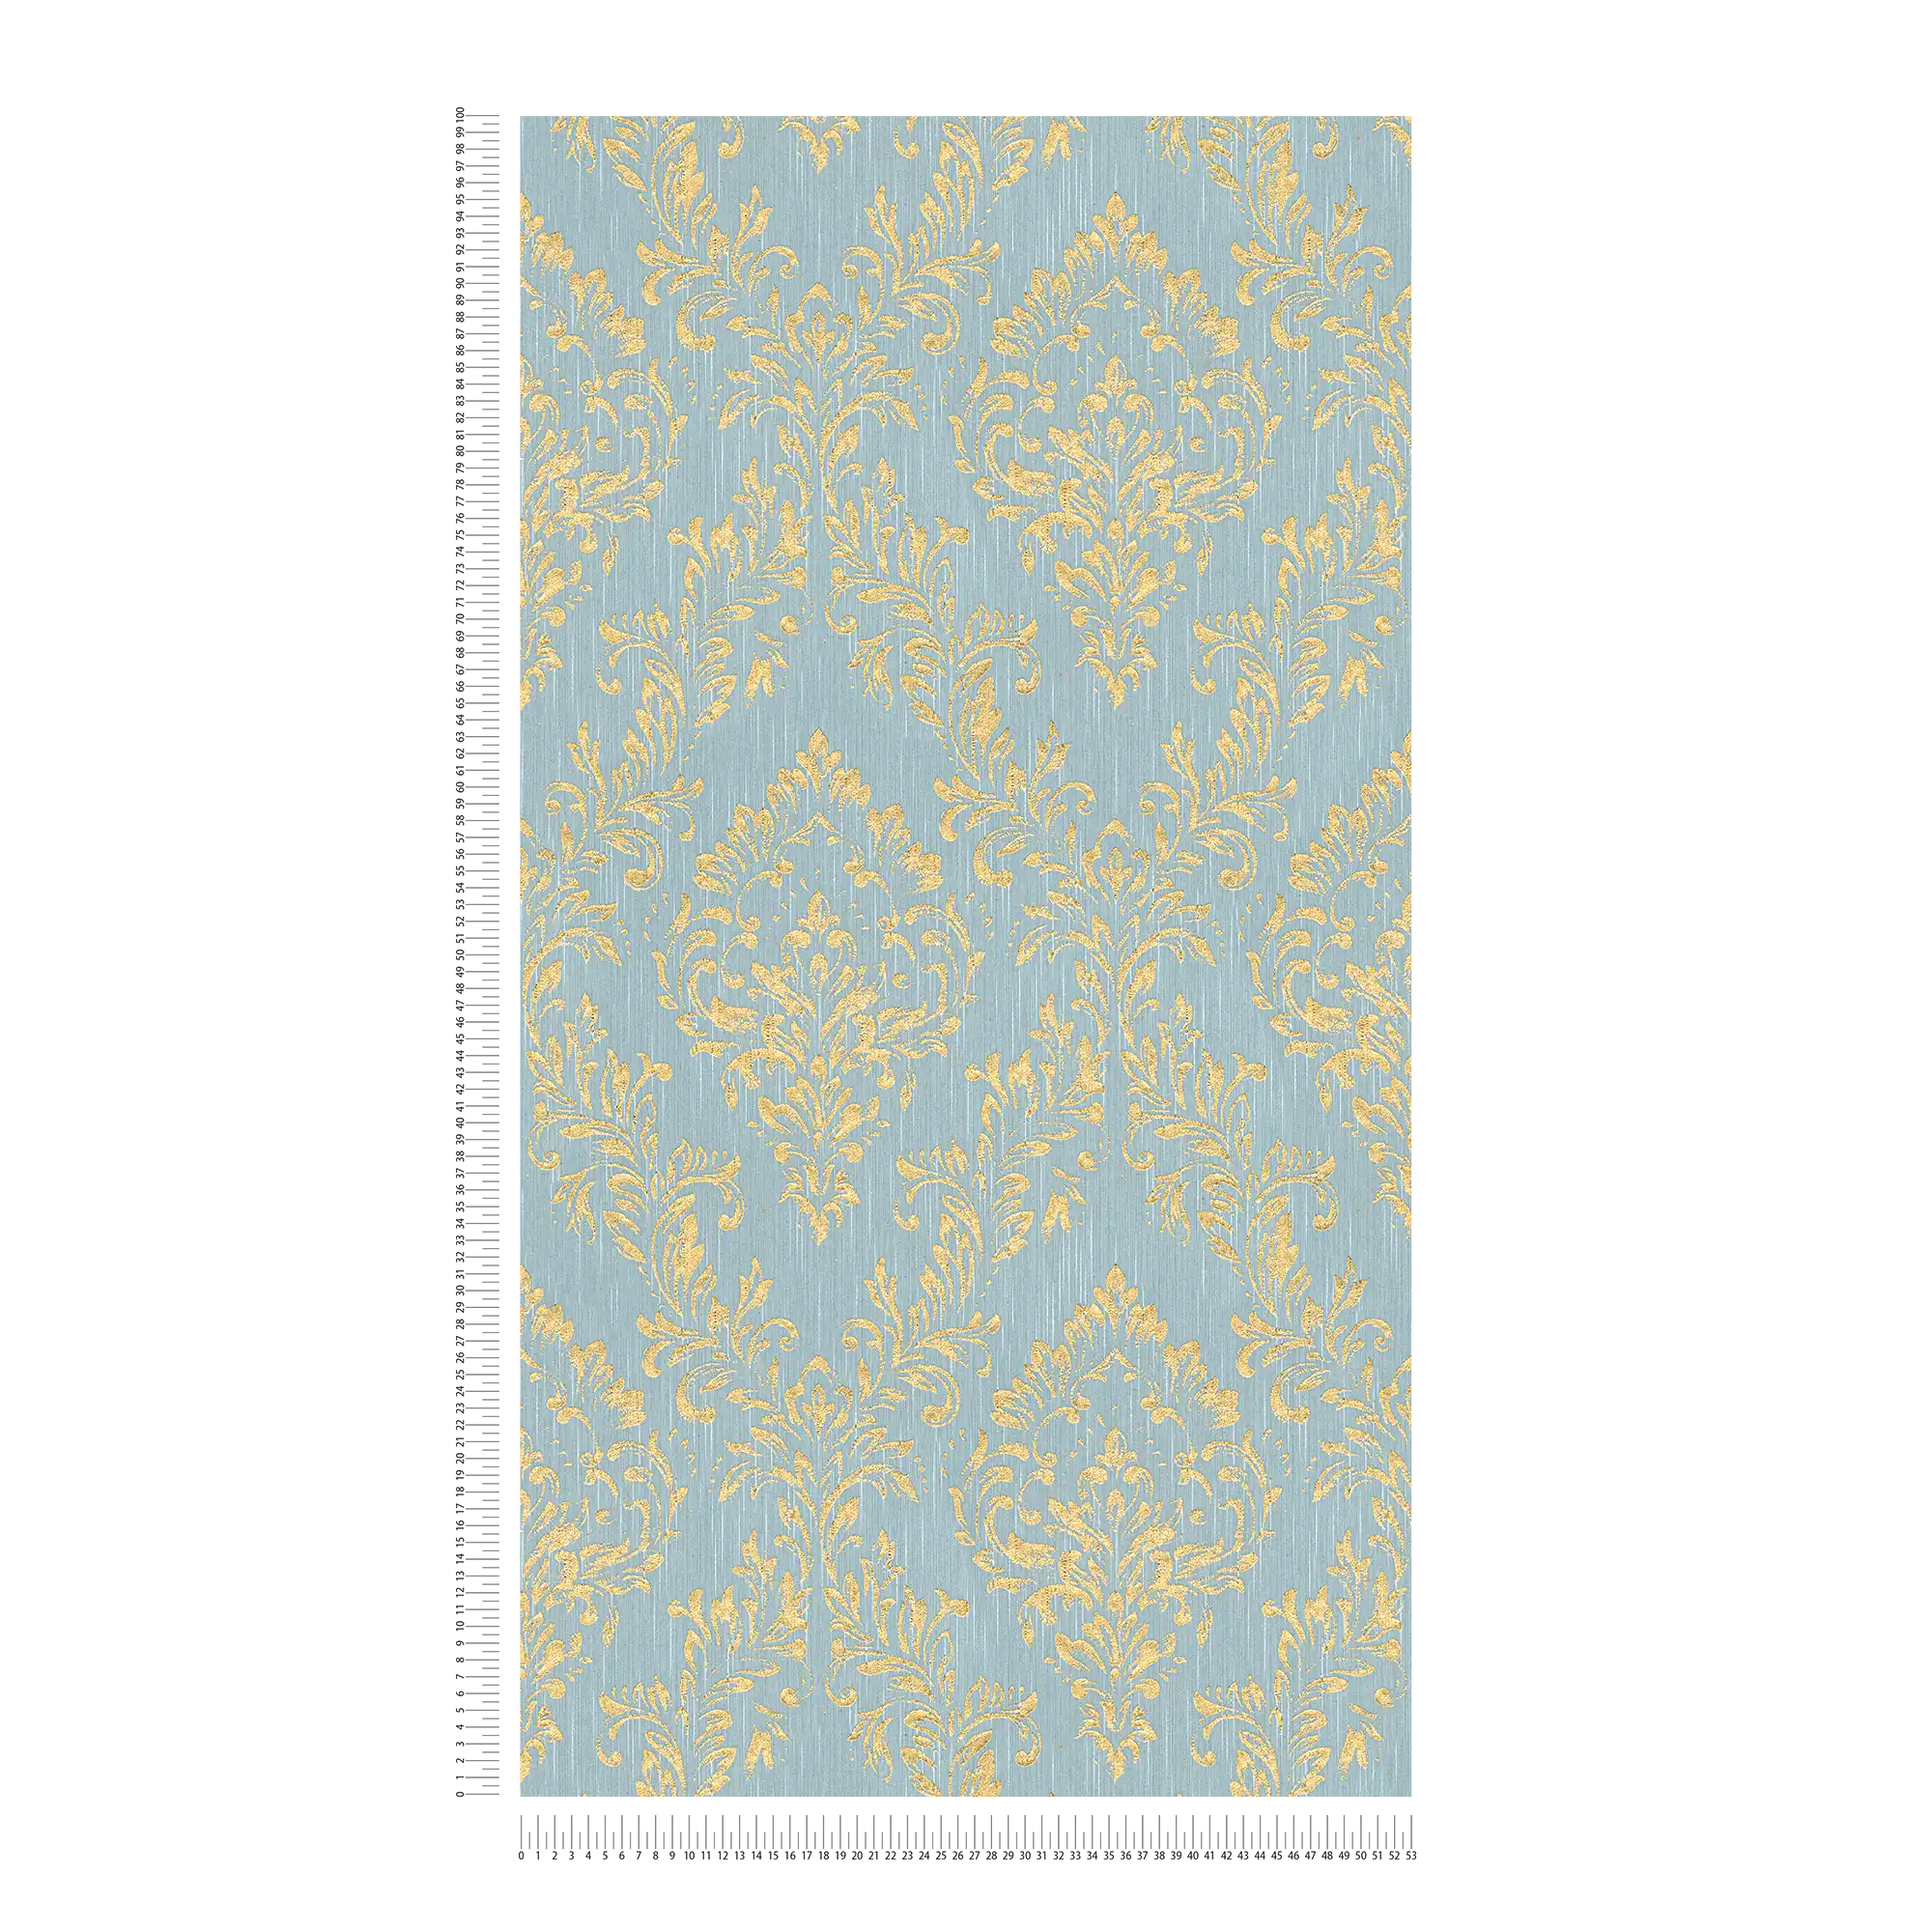             Ornament-Tapete floral mit goldenem Glitzer-Effekt – Gold, Blau, Grün
        